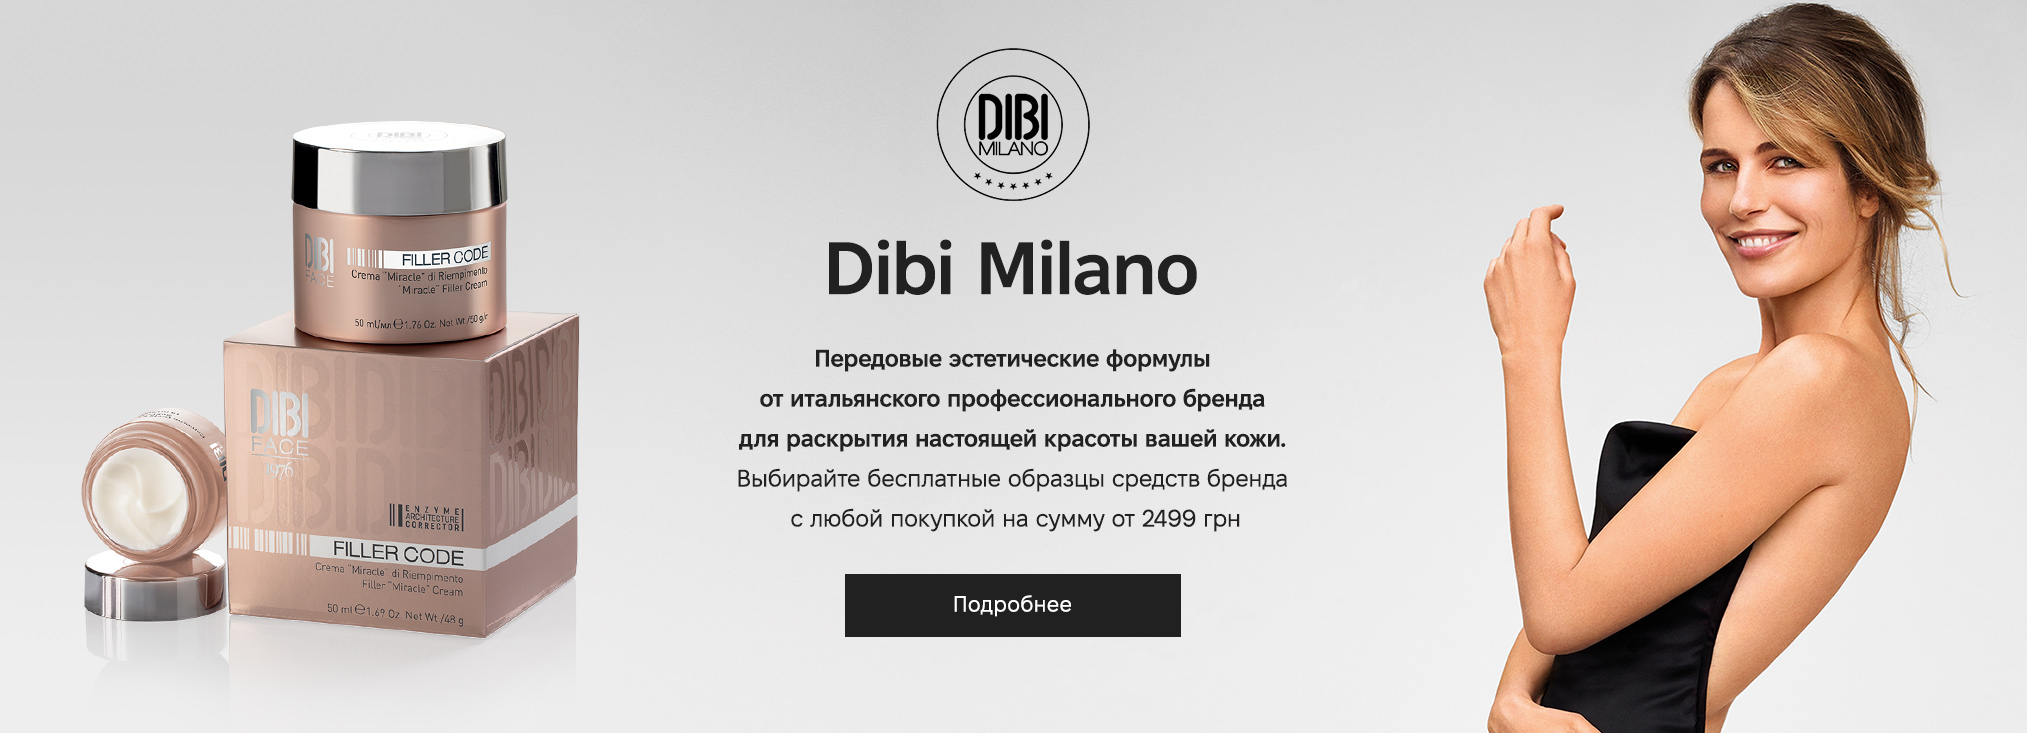 DIBI Milano_20273